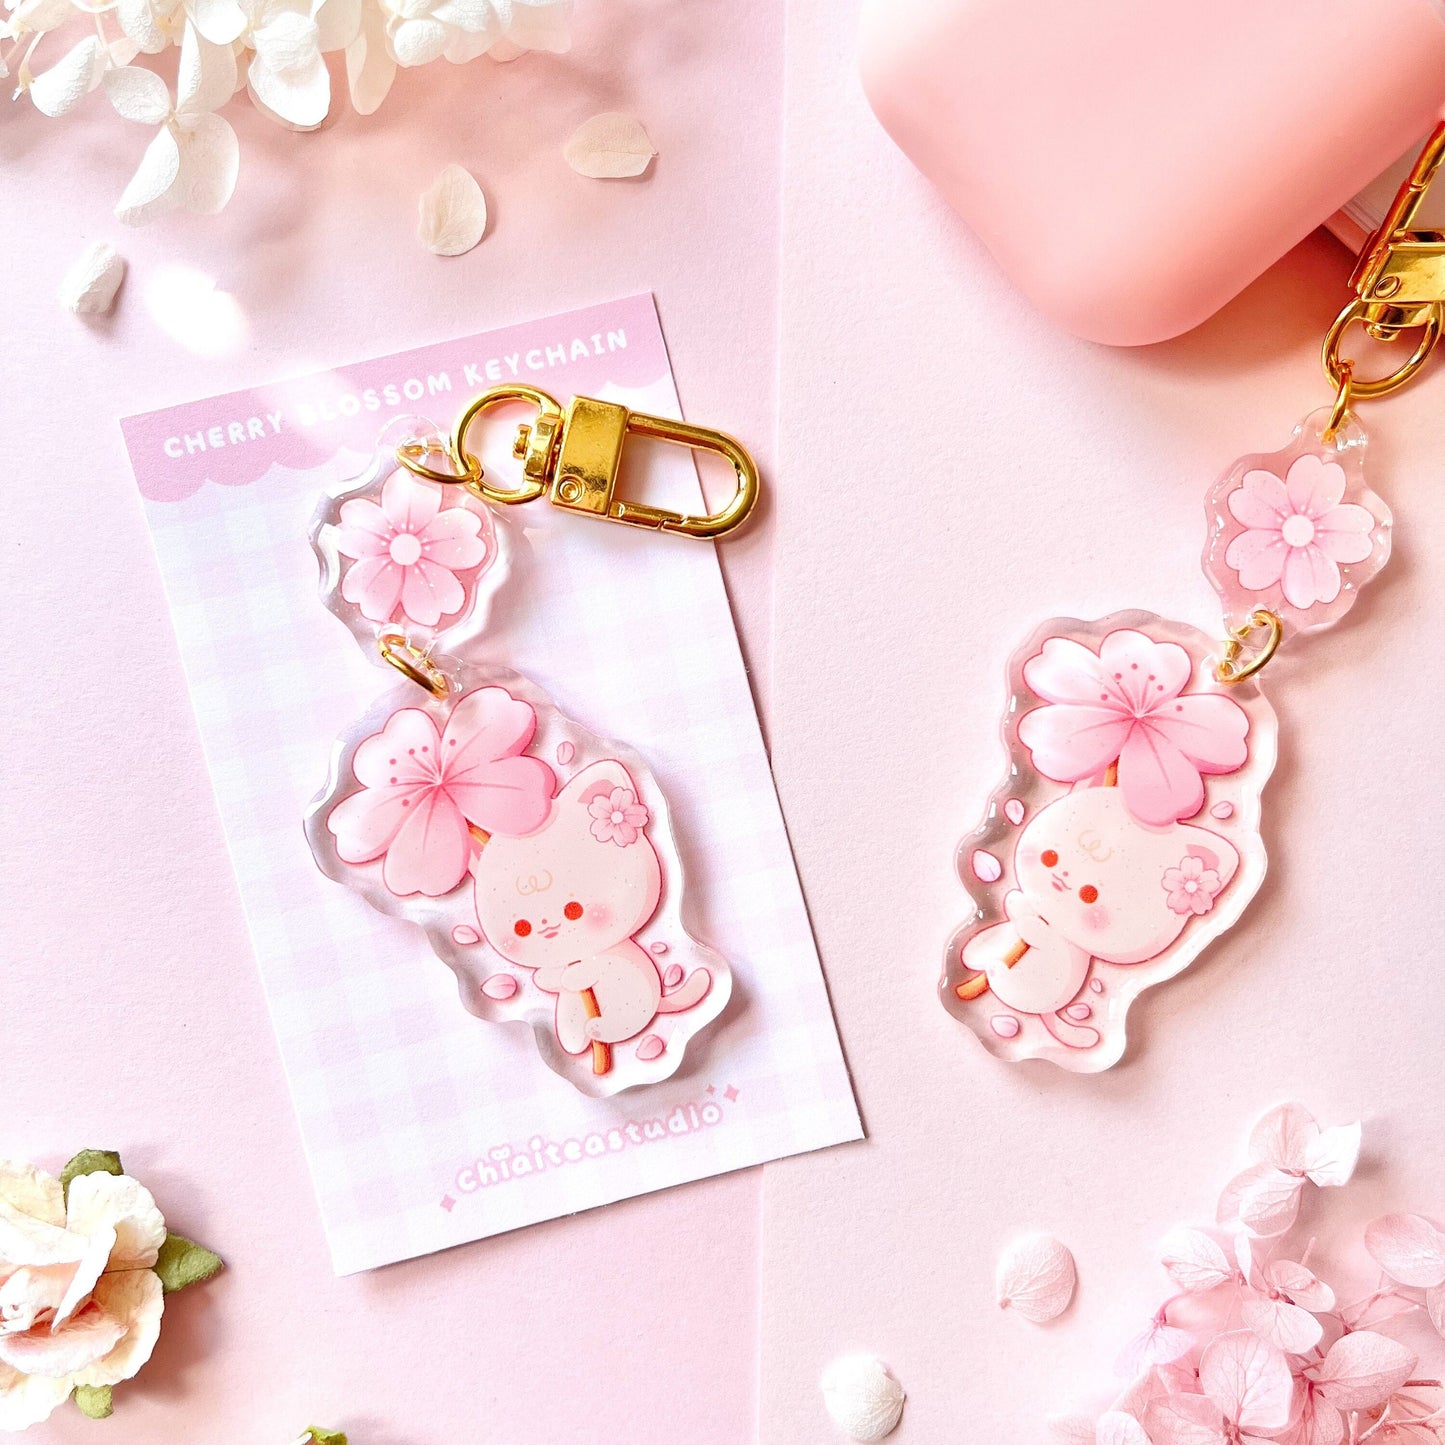 Cherry Blossom Keychain with Glitter Epoxy